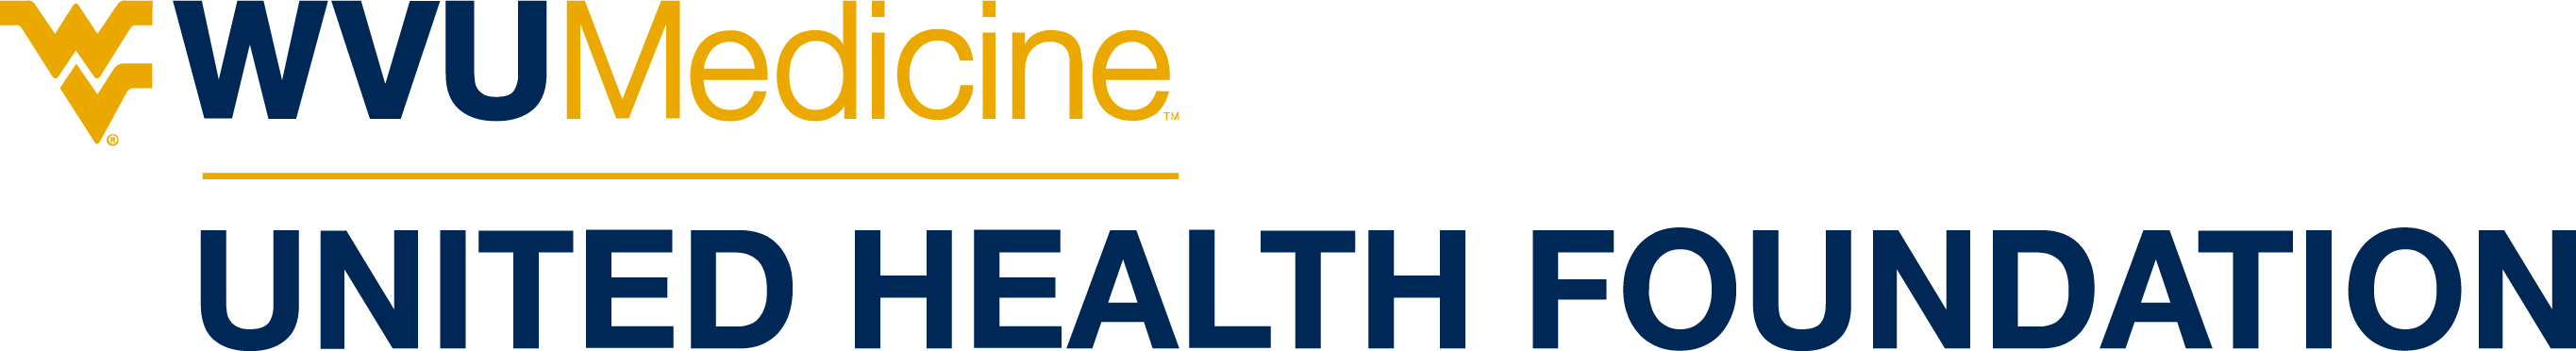 WVU Medicine United Health Foundation logo